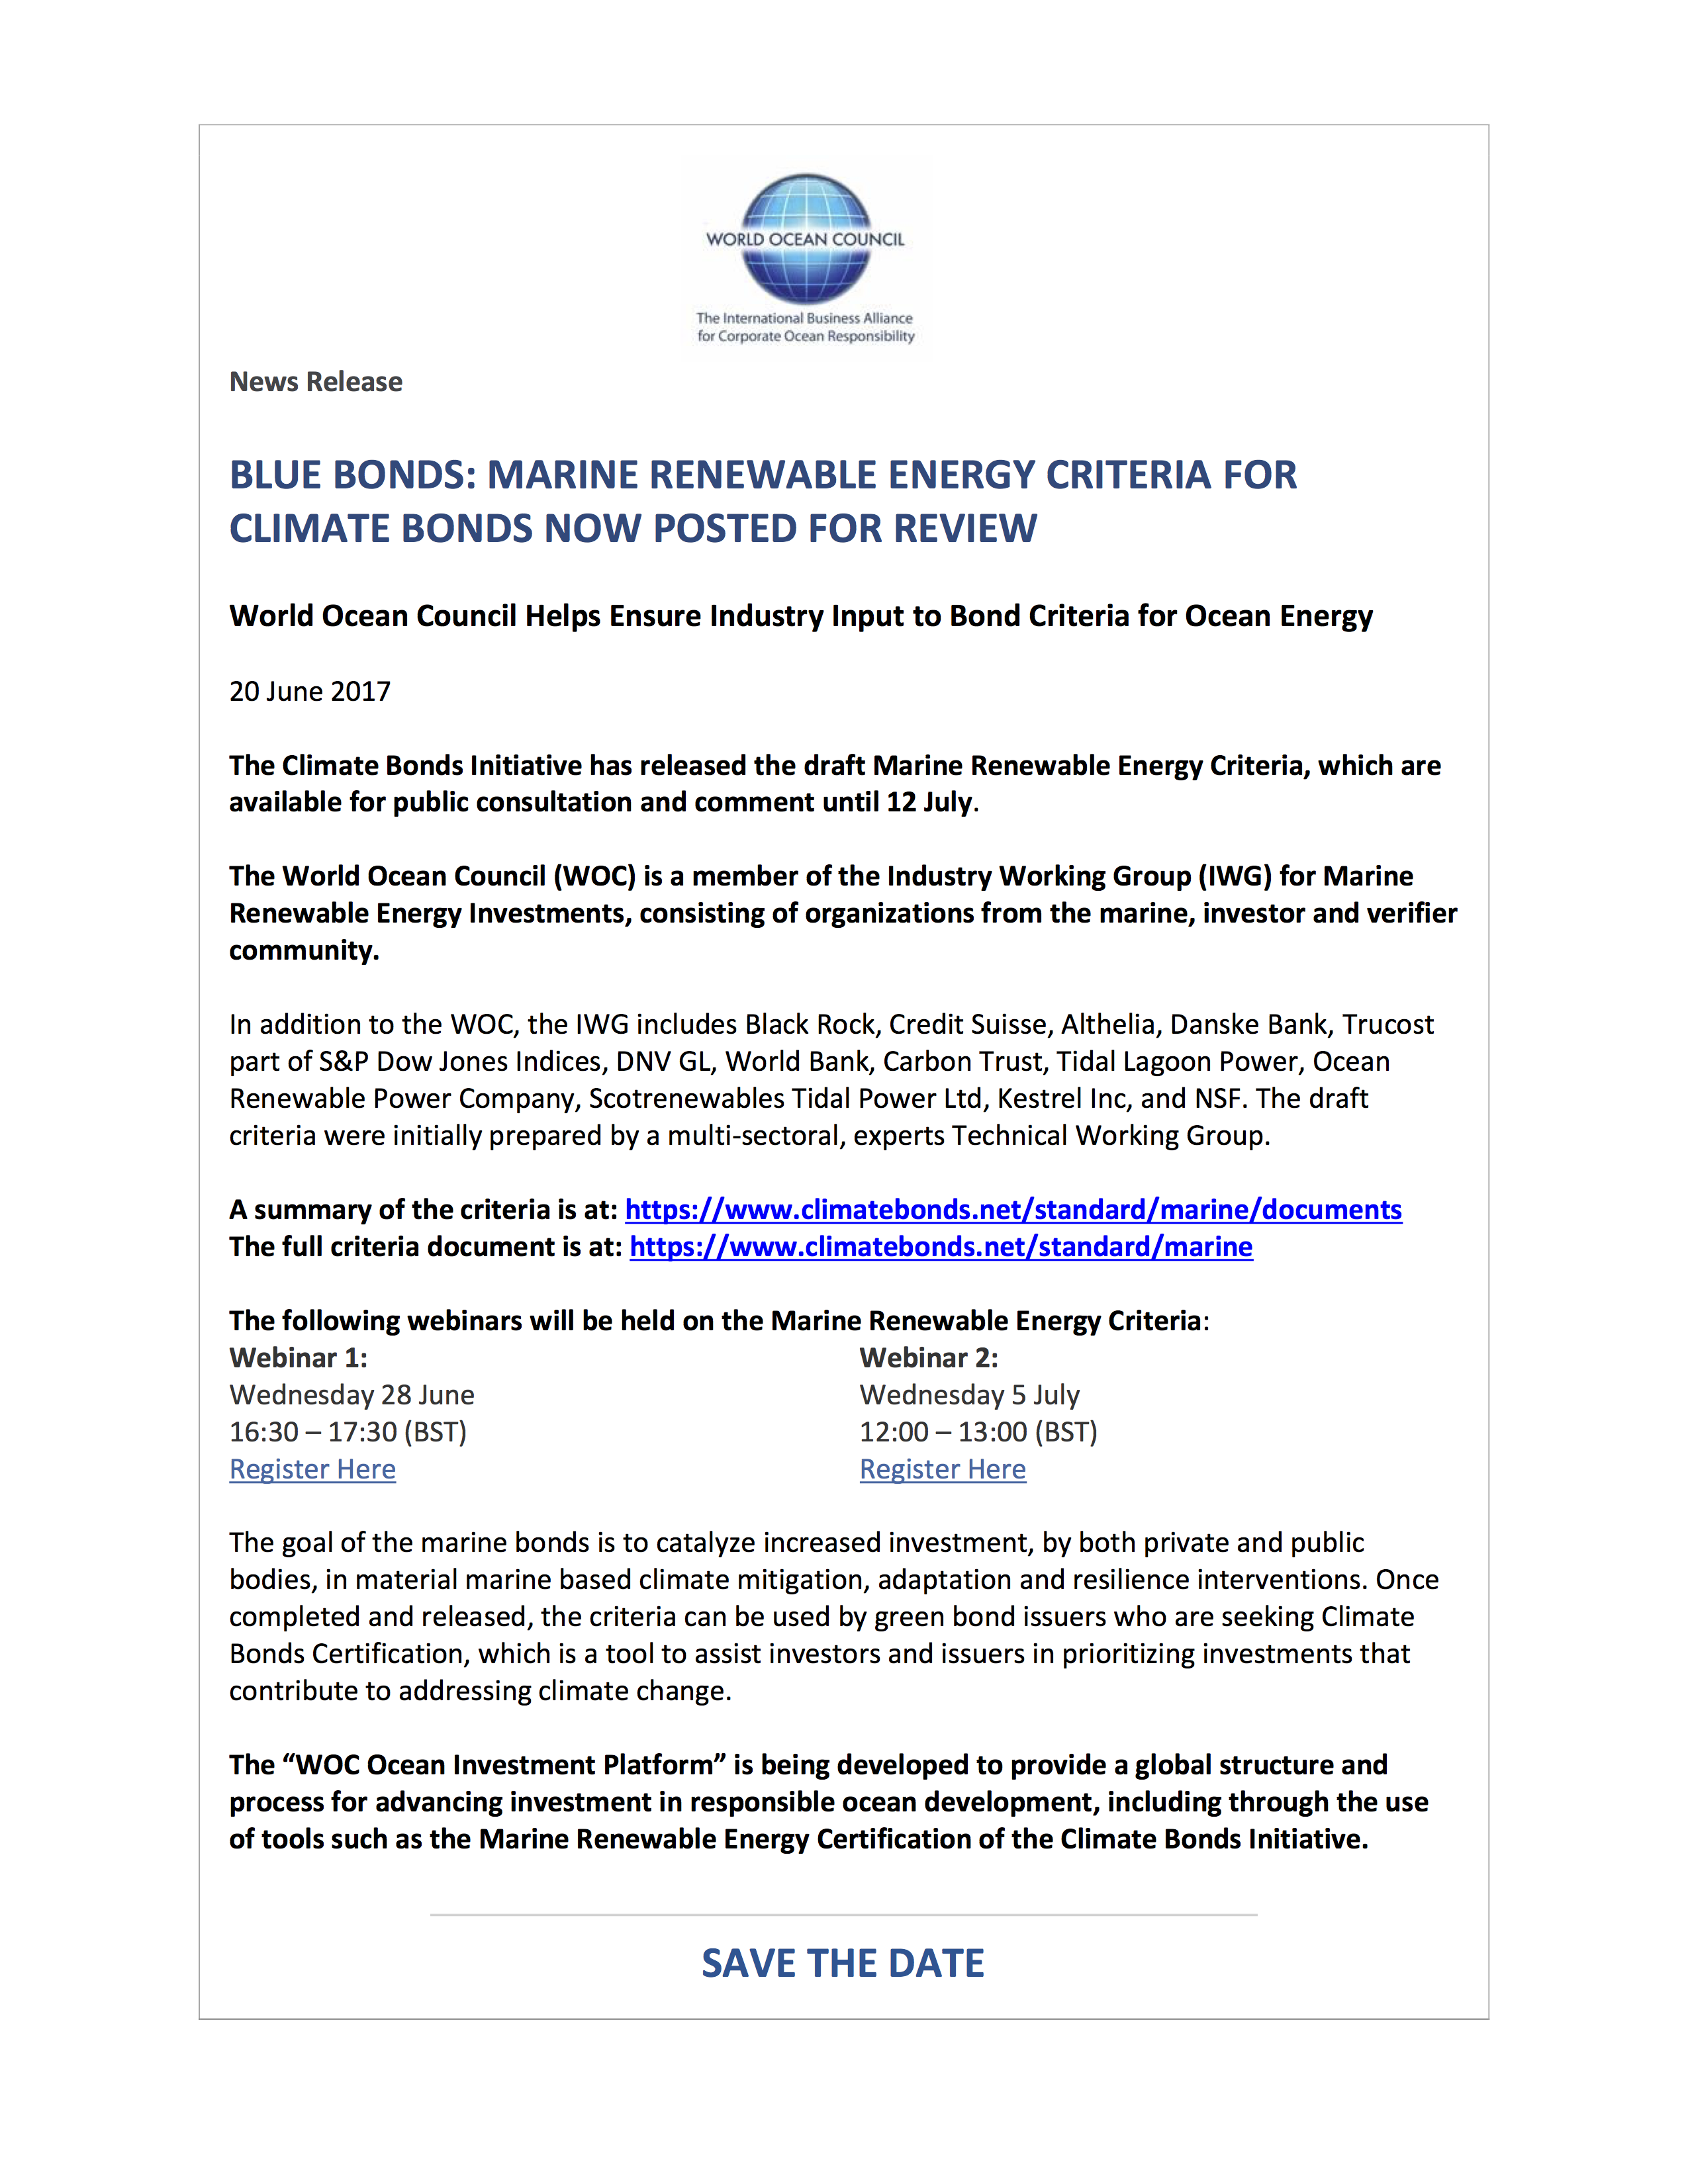 Blue Bonds - Marine Renewable Energy Criteria for Climate Bonds Posted